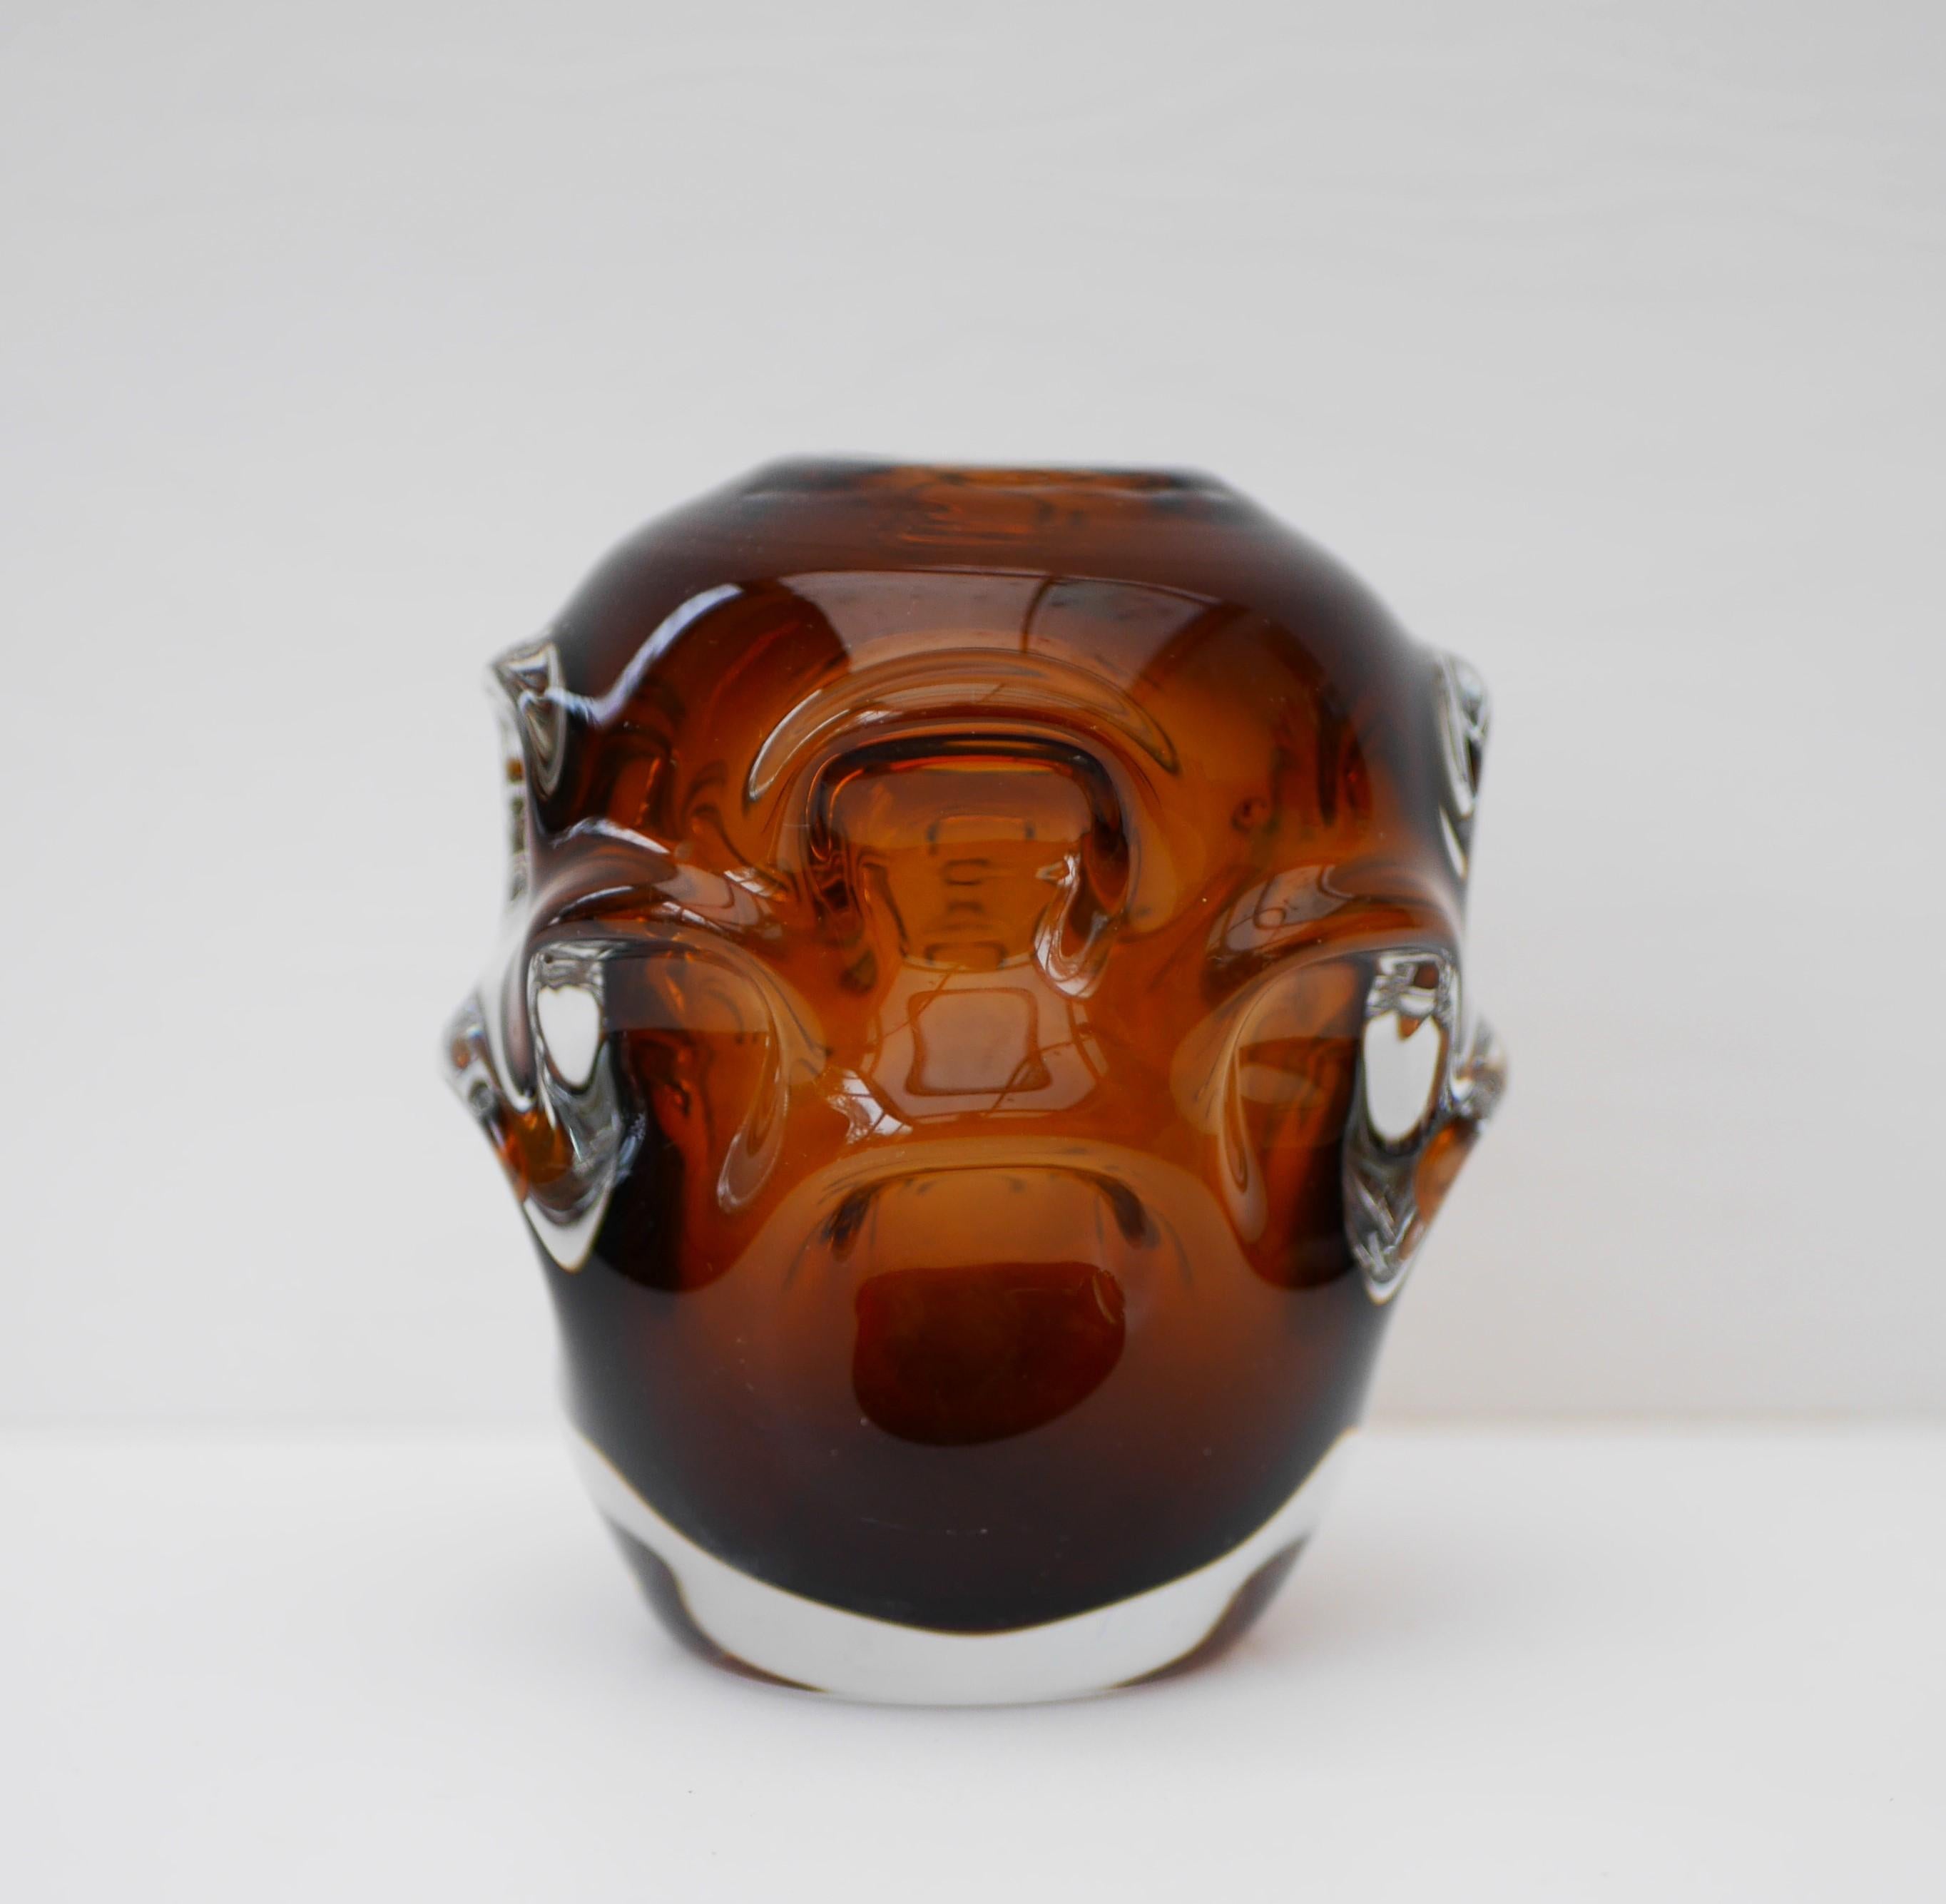 A stunning dark amber glass vase by Börne Augustsson för Åseda Glassworks, Sweden. Unsigned from the 1950s. A stunning modernist piece, this is very much a statement glass vase.

Åseda was formed on 29 June 1946 and registered as Åseda Glasbruks AB